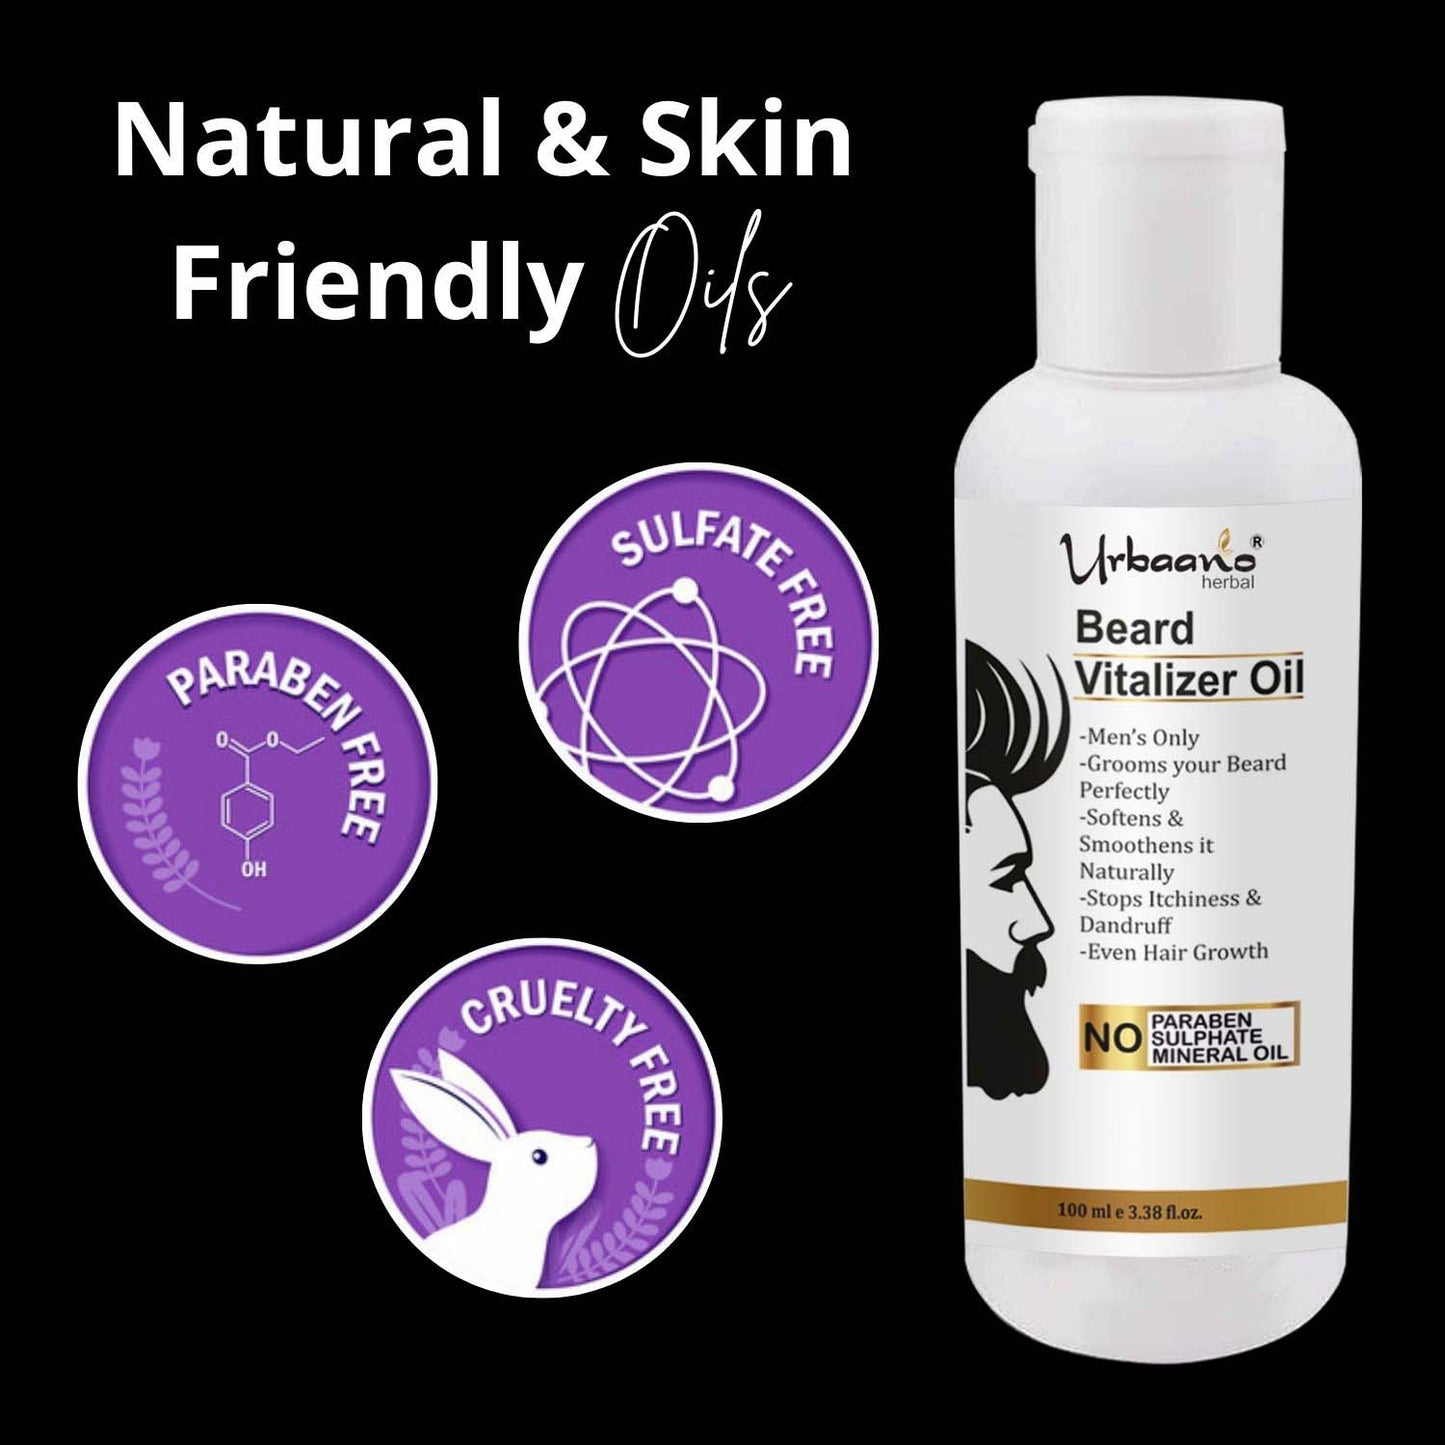 urbaano herbal beard oil is sulphate, paraben, mineral oil, crurelty  free